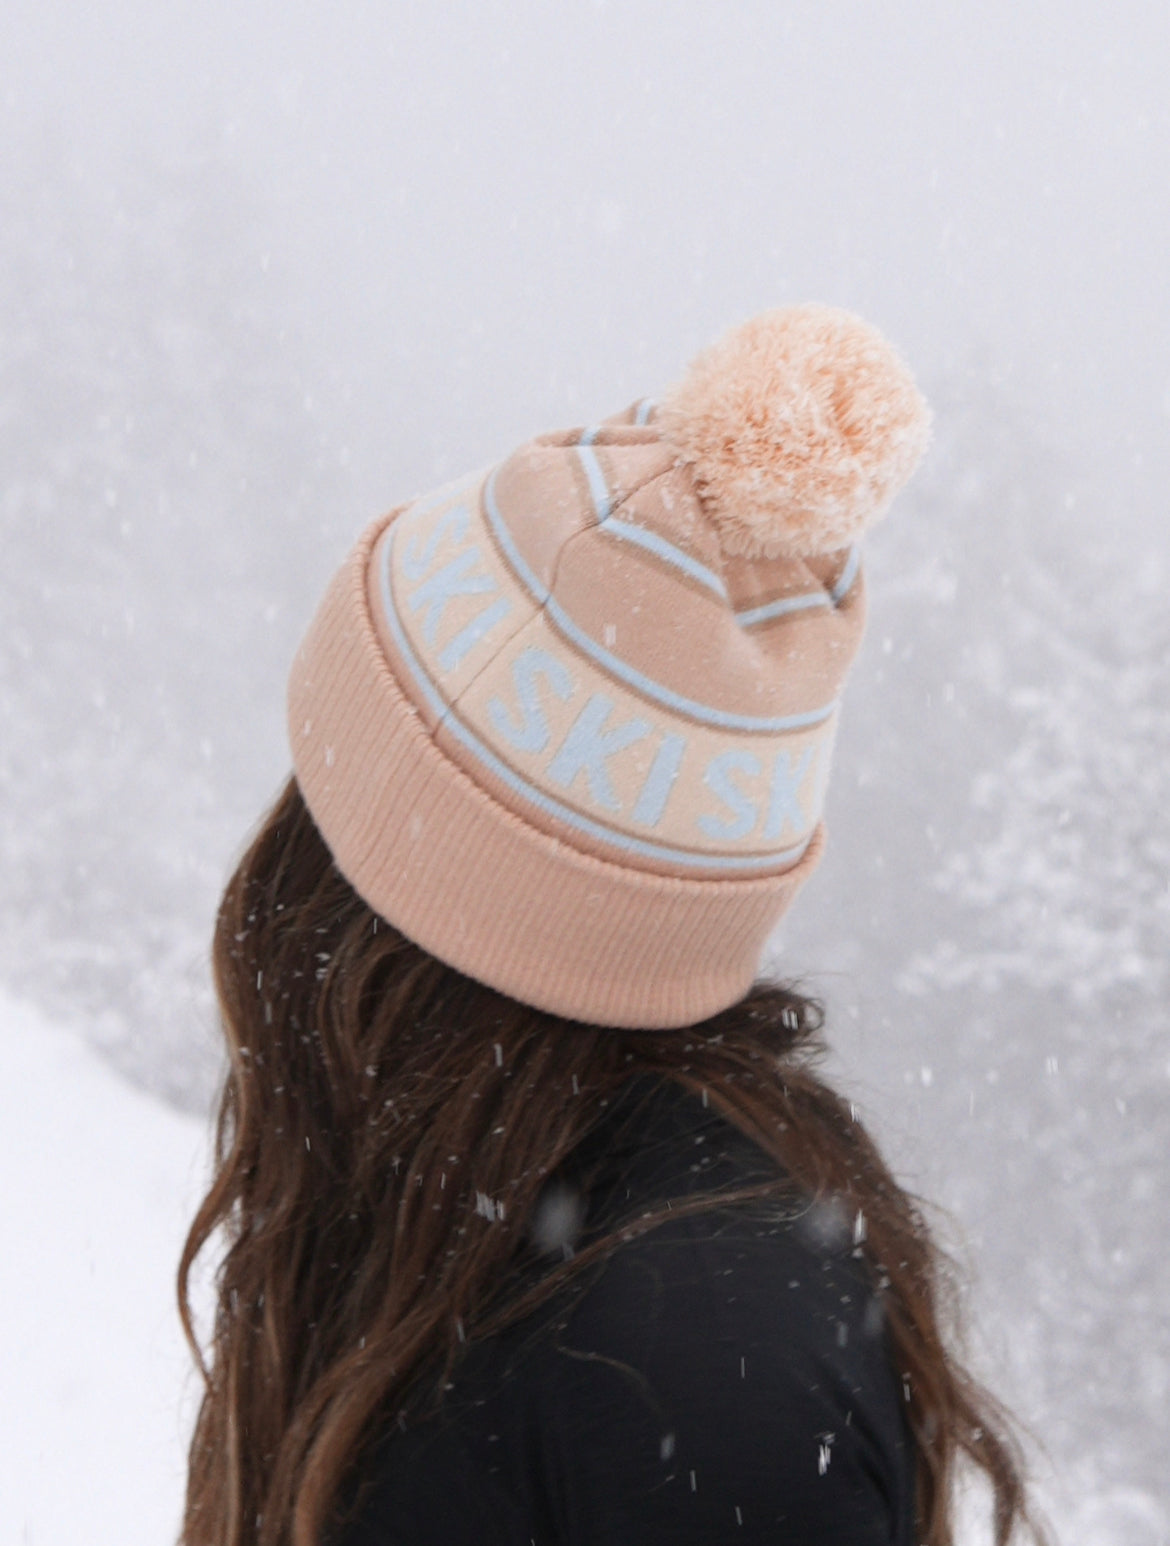 Apres ski beanie,  fashion ski hat, Retro ski wear, vintage European ski knit hat, winter beanie, cream & blue beanie with pom pom 